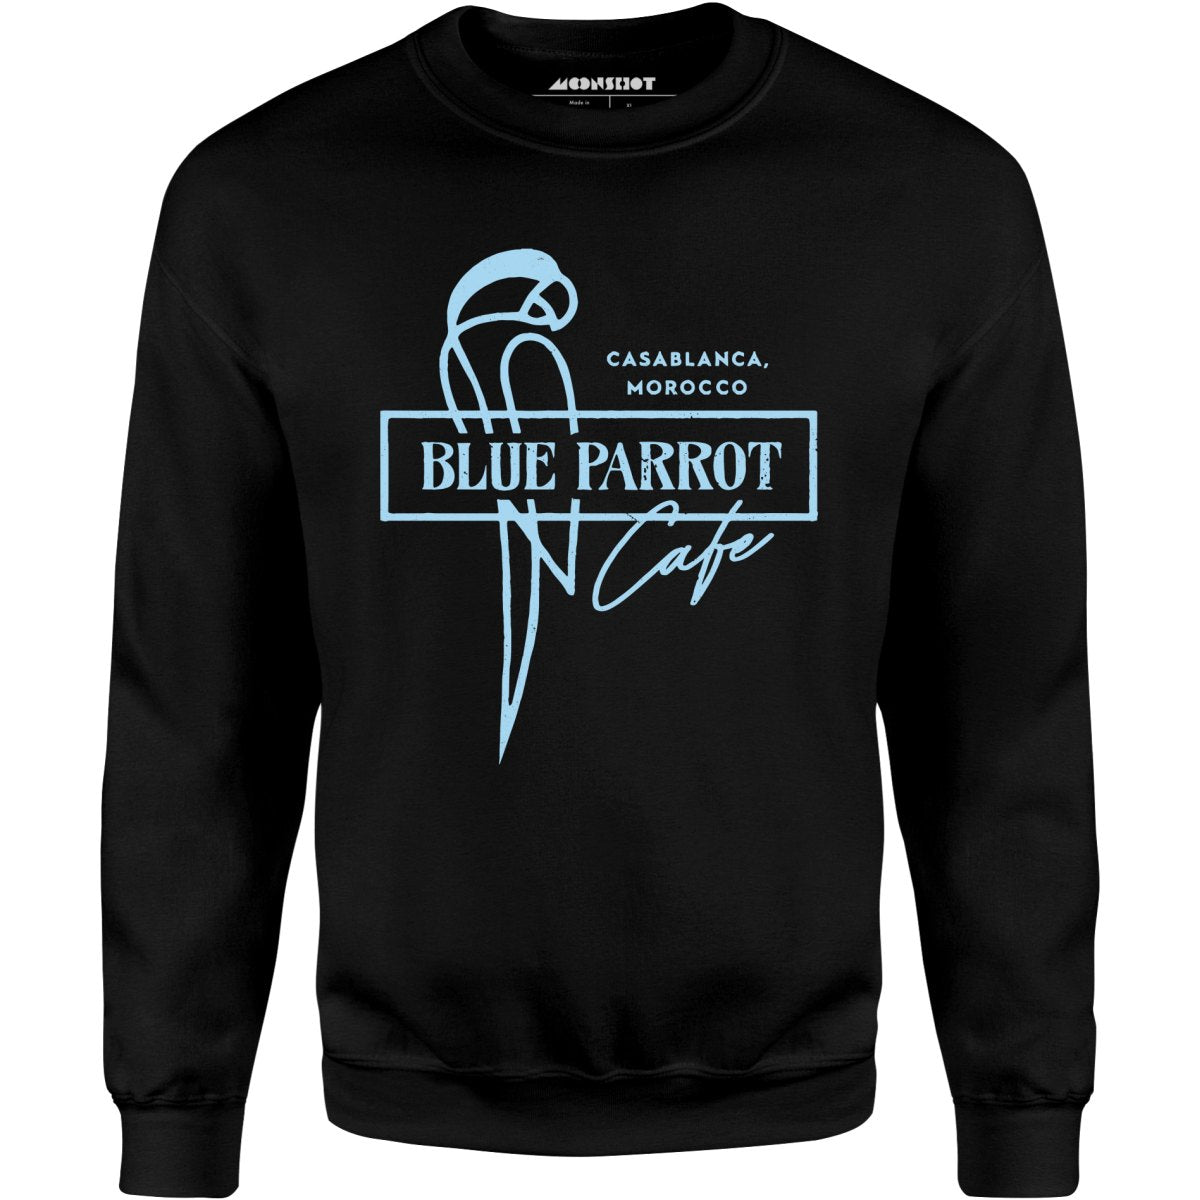 Casablanca - Blue Parrot Cafe - Unisex Sweatshirt